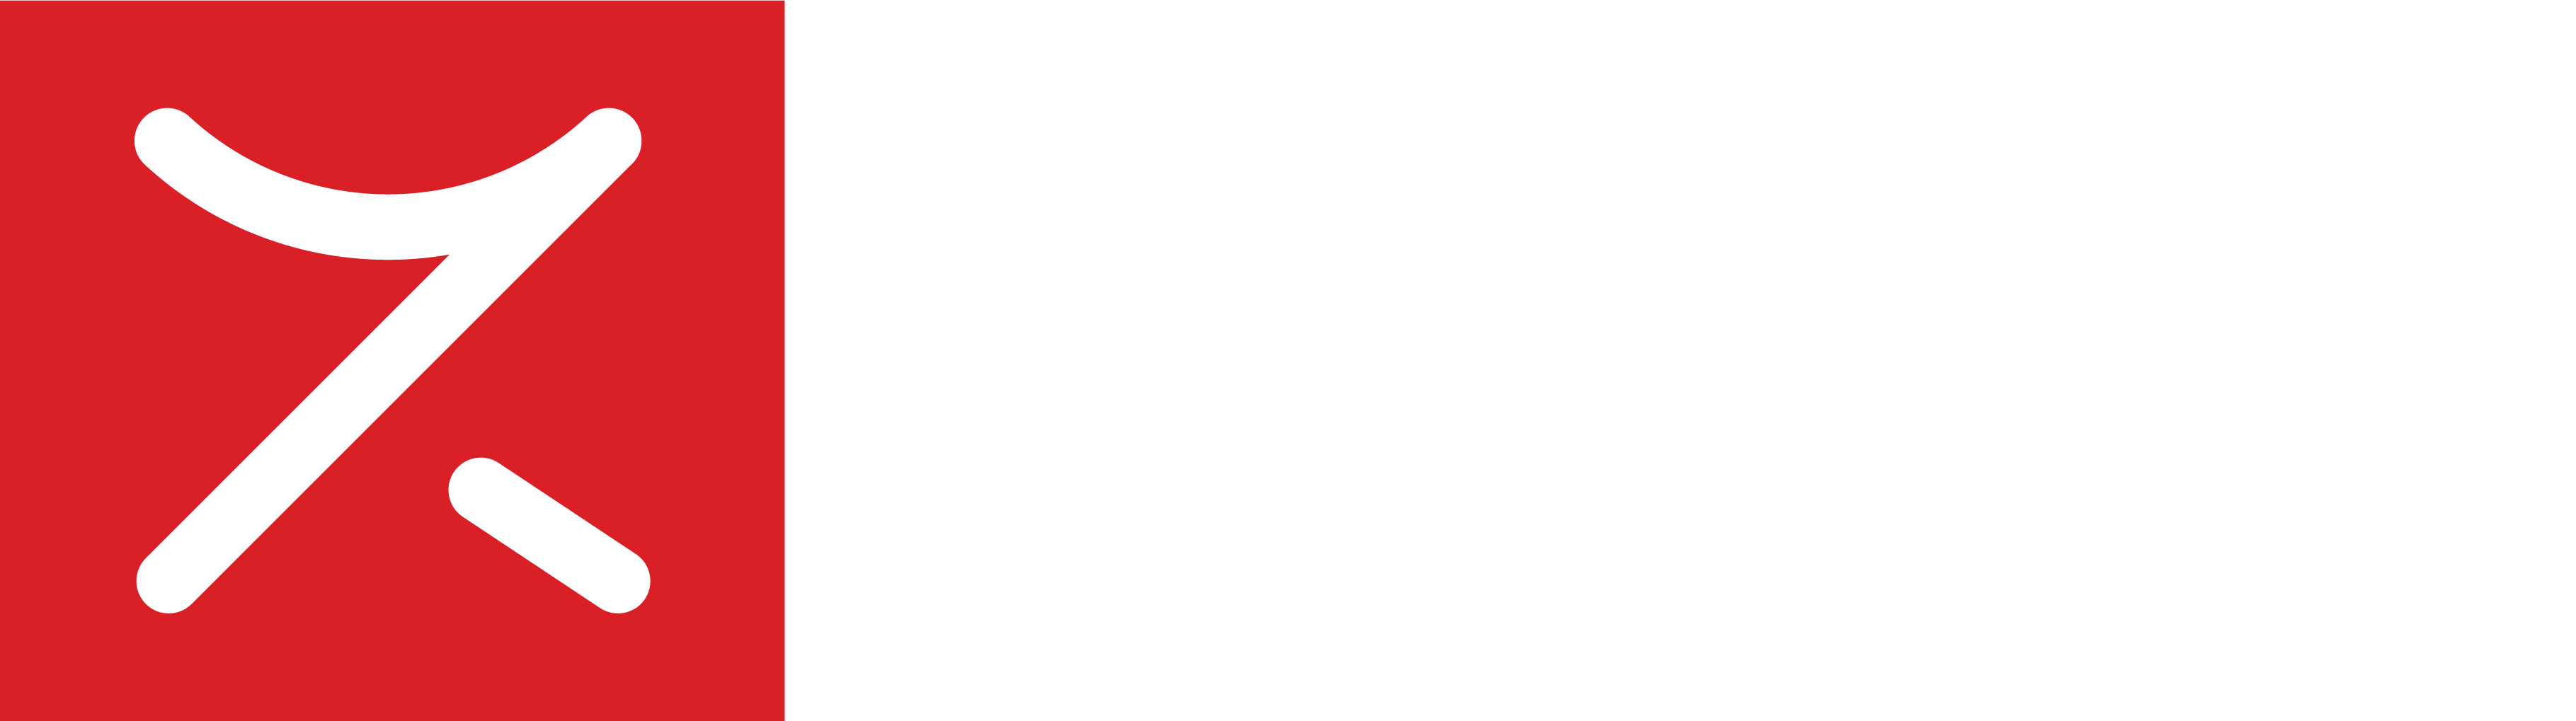 ZYBO Tech Lab